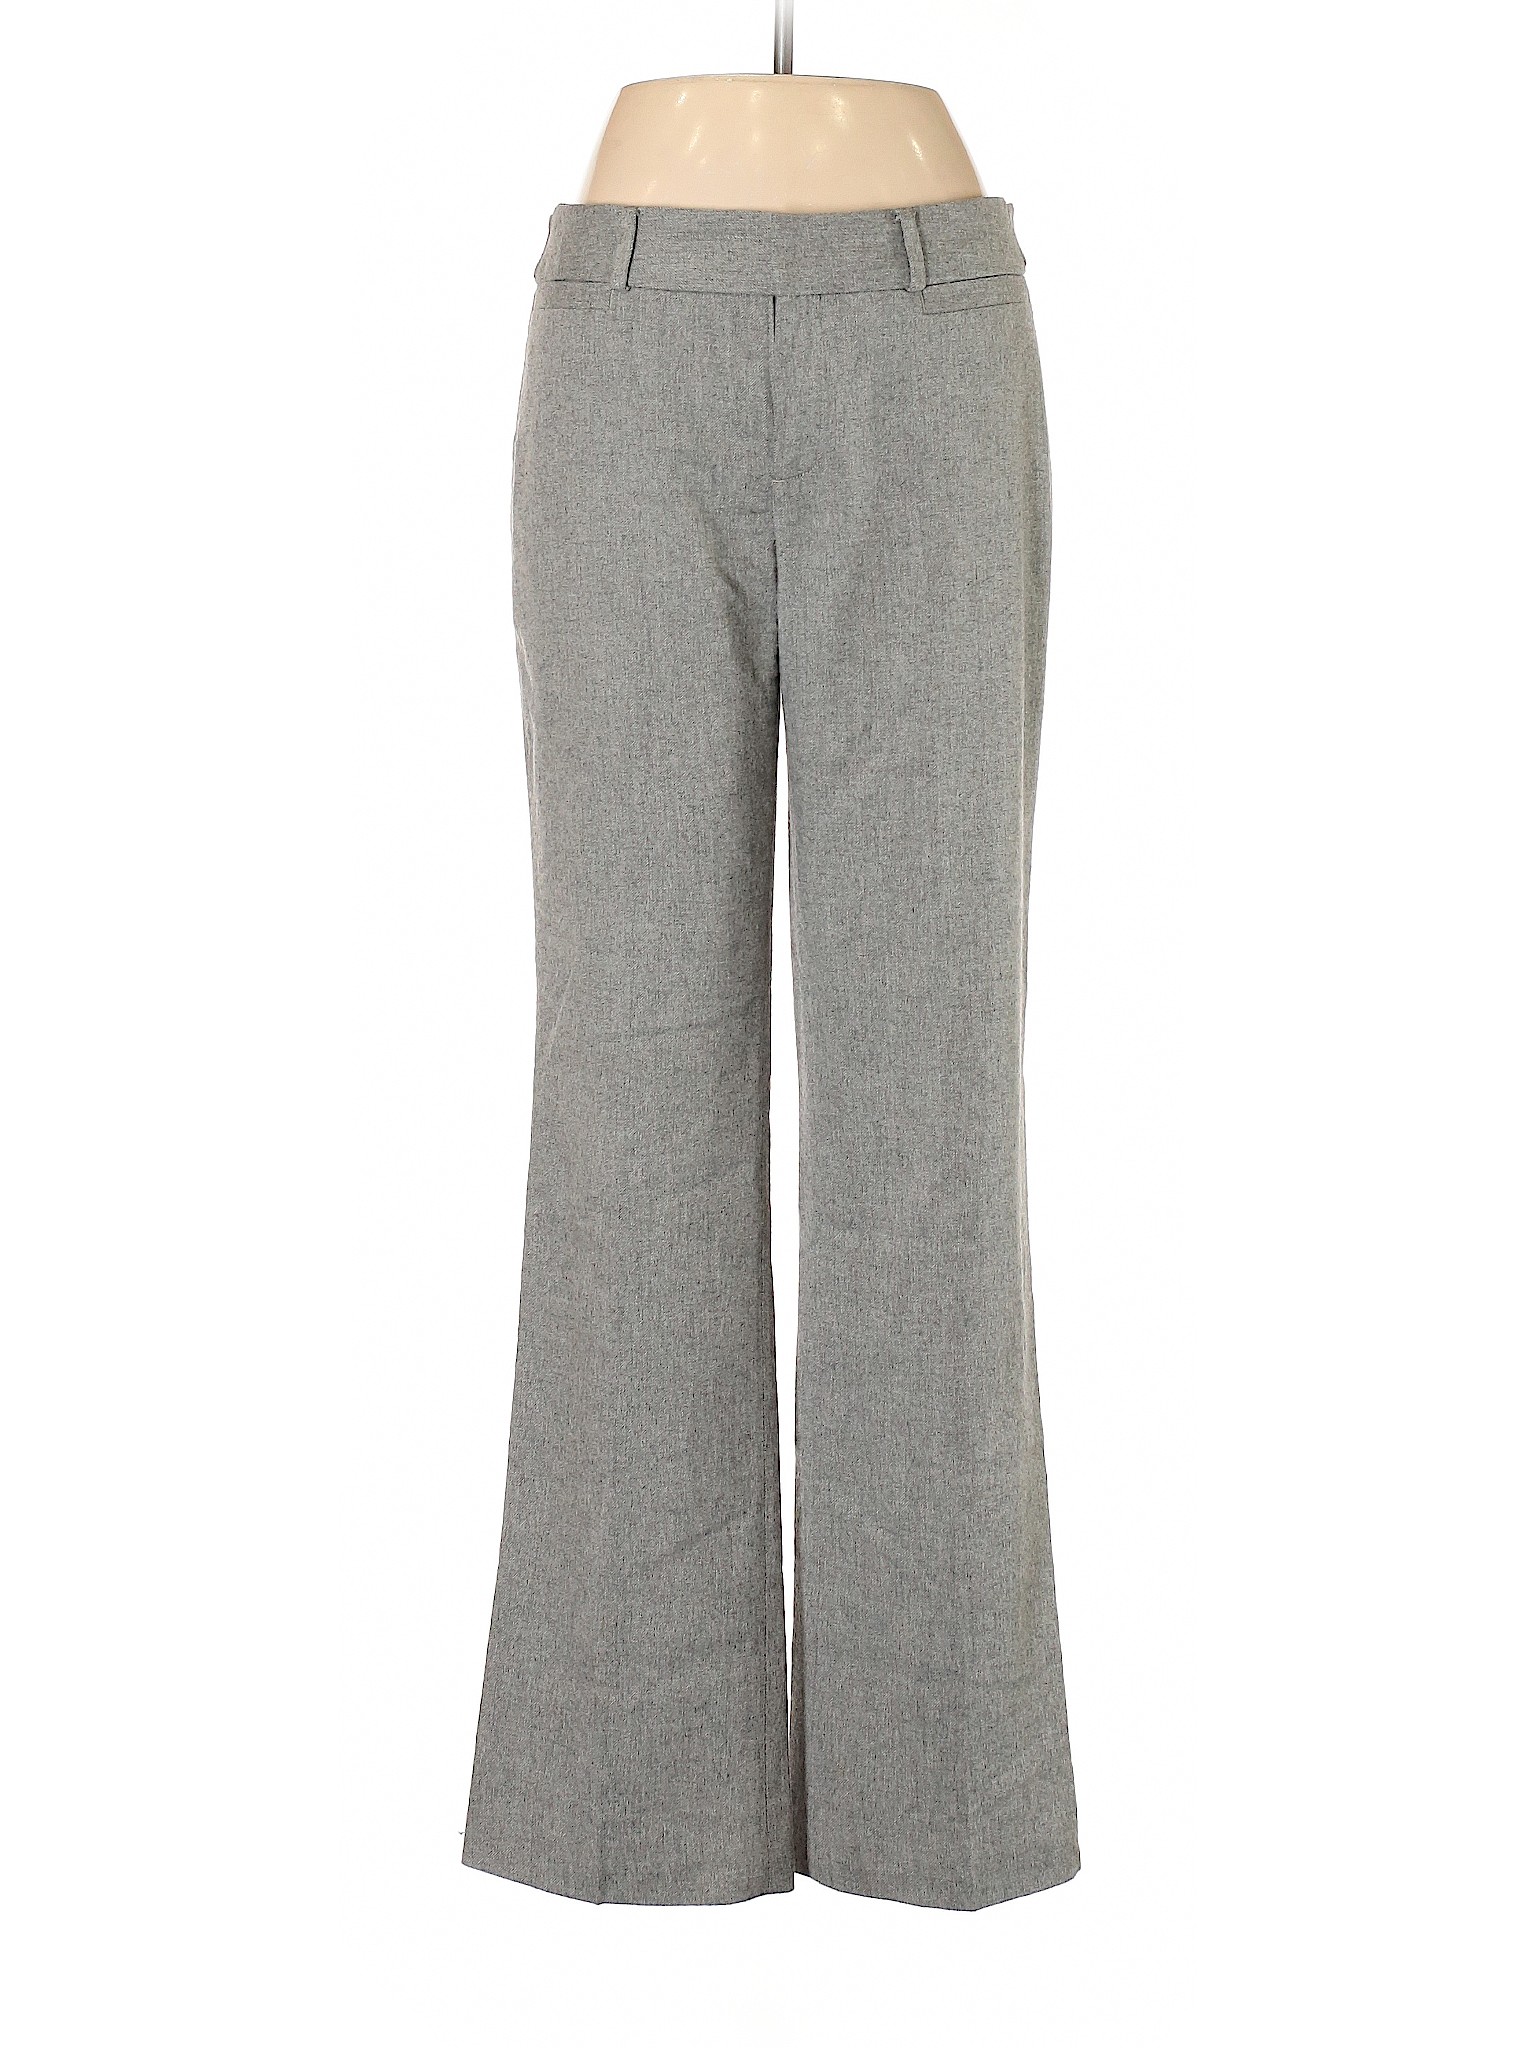 Banana Republic Women Gray Dress Pants 6 | eBay